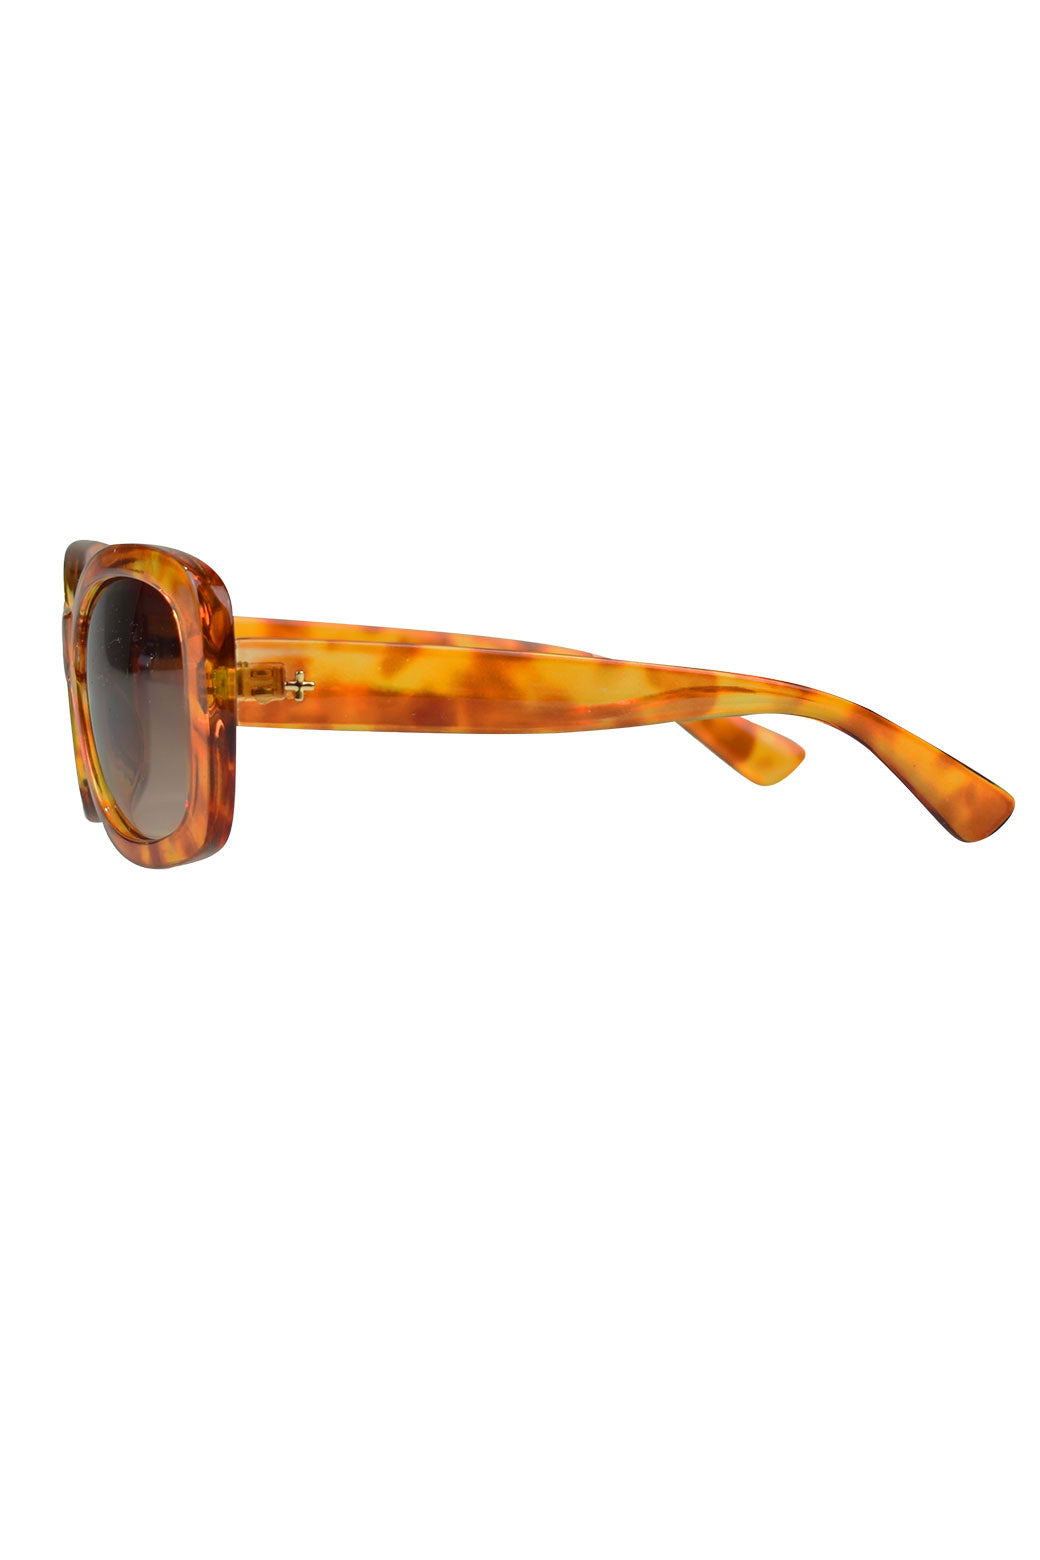 Peta + Jain Tiffany Tortoiseshell Sunglasses